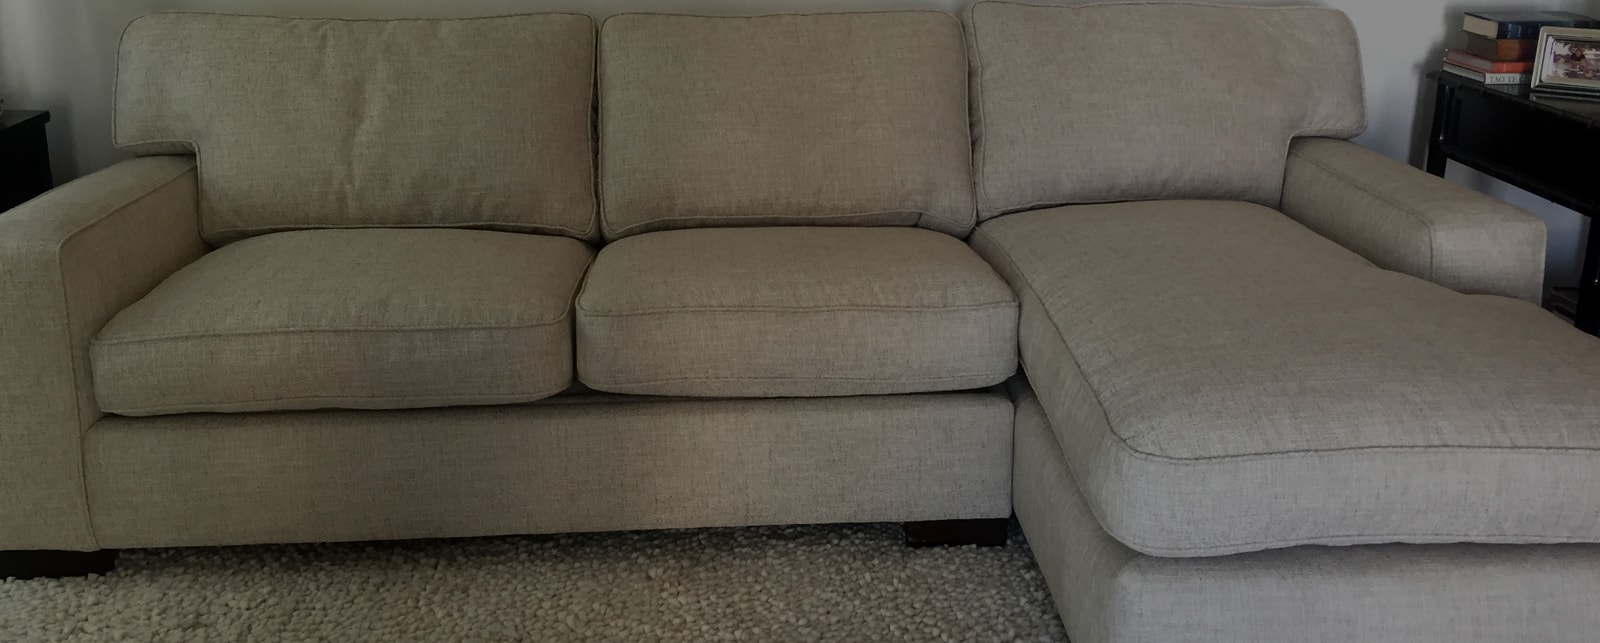 sectional sofa upholstery sherman oaks